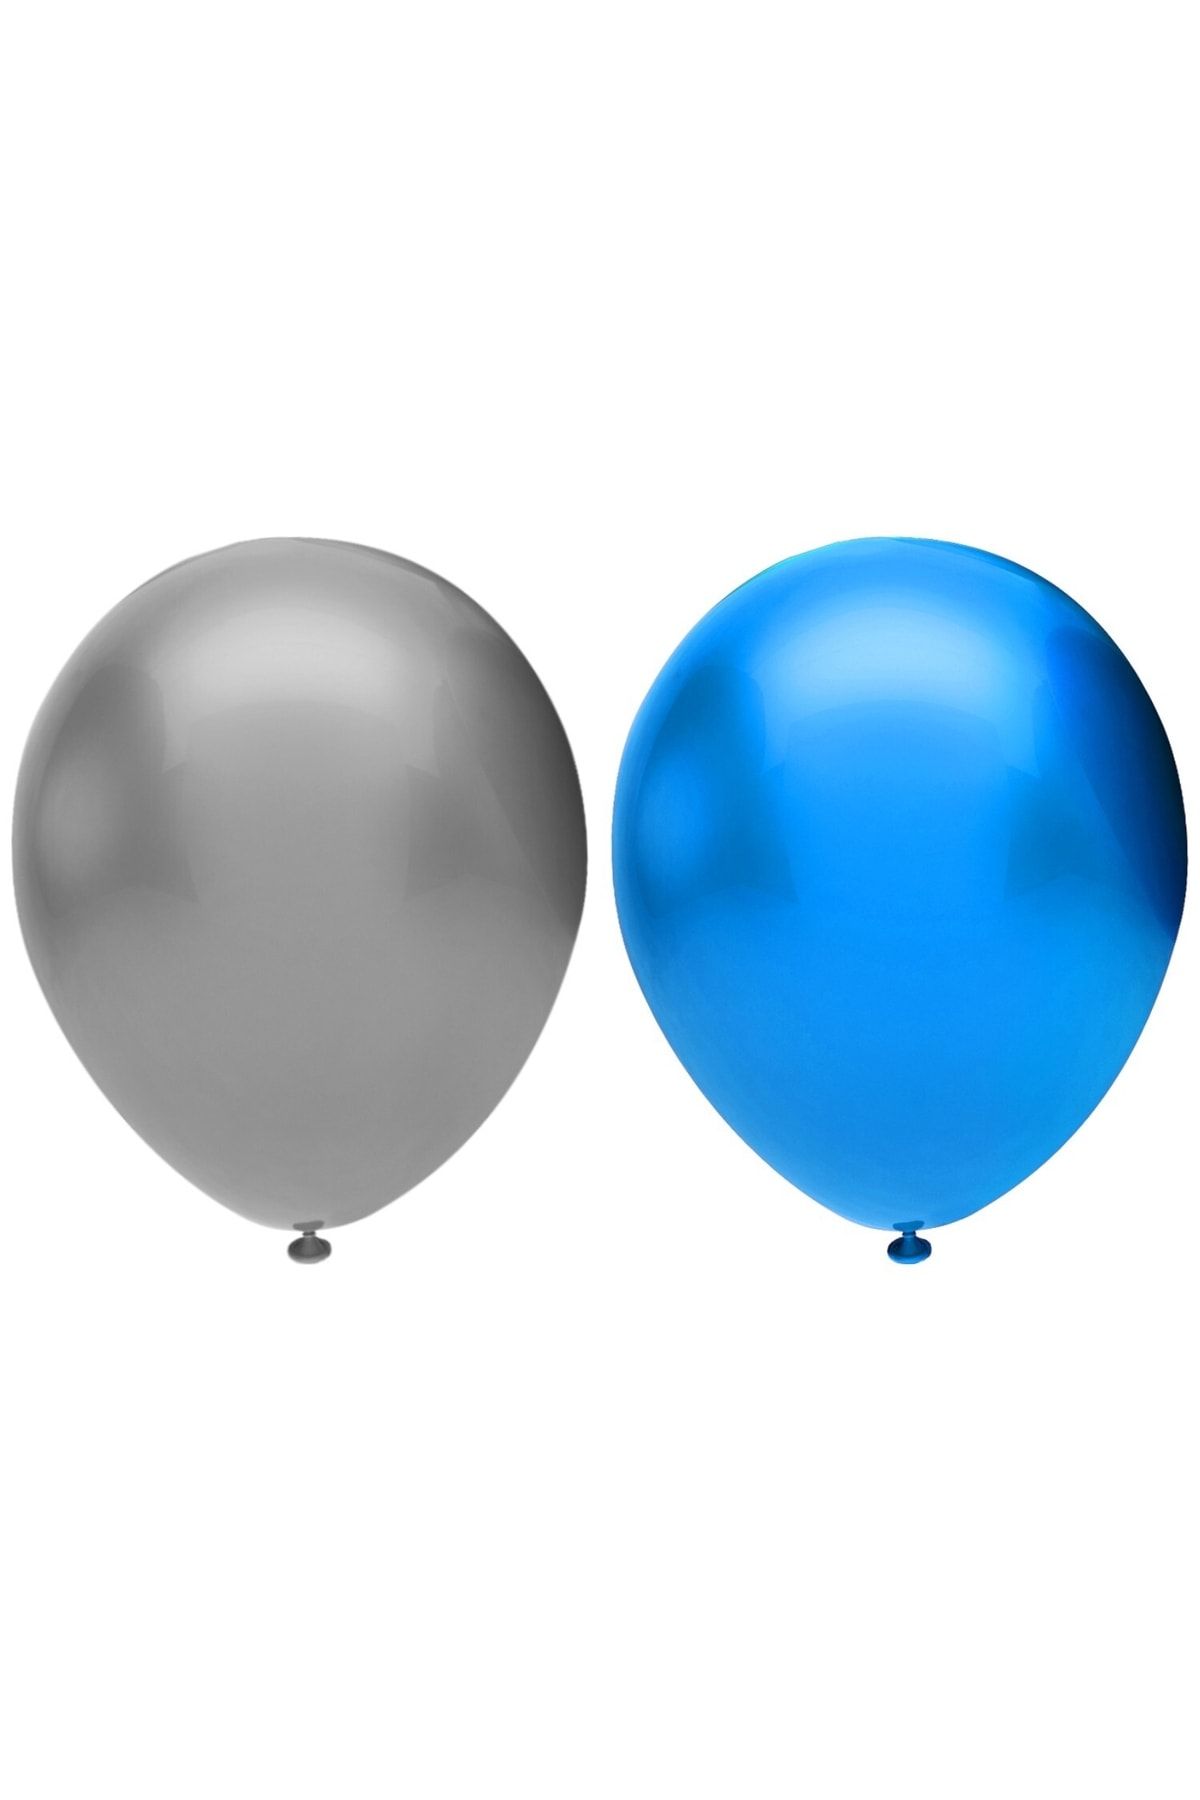 MKYS 5 Adet Mavi-gümüş Metalik Balon Helyum Gazı Uyumludur.-doğum Günü Parti Balonları